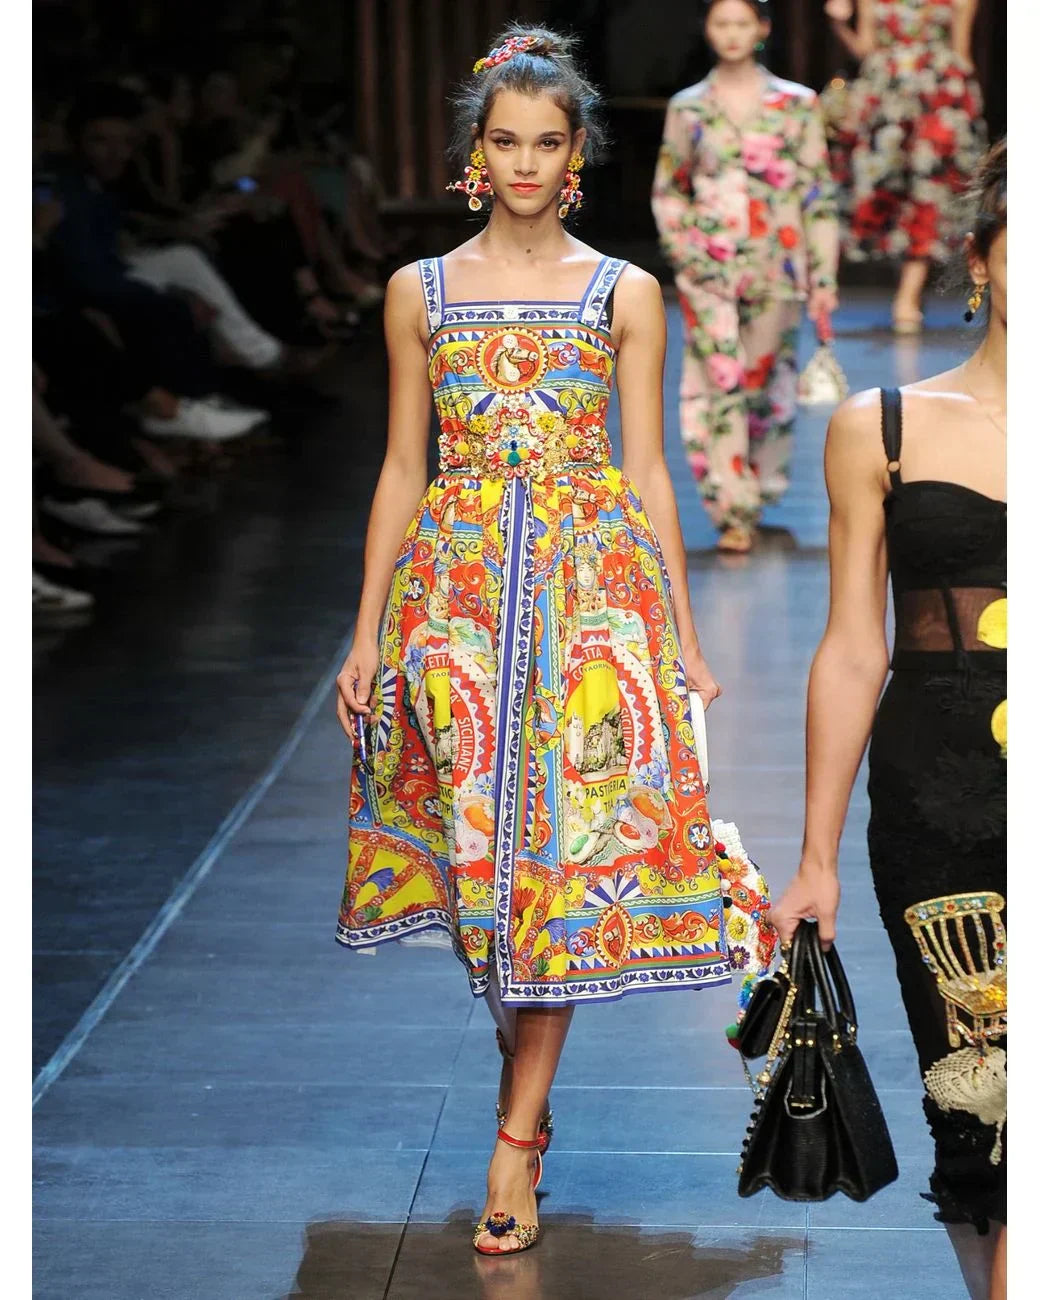 Model walking the Dolce & Gabbana runway